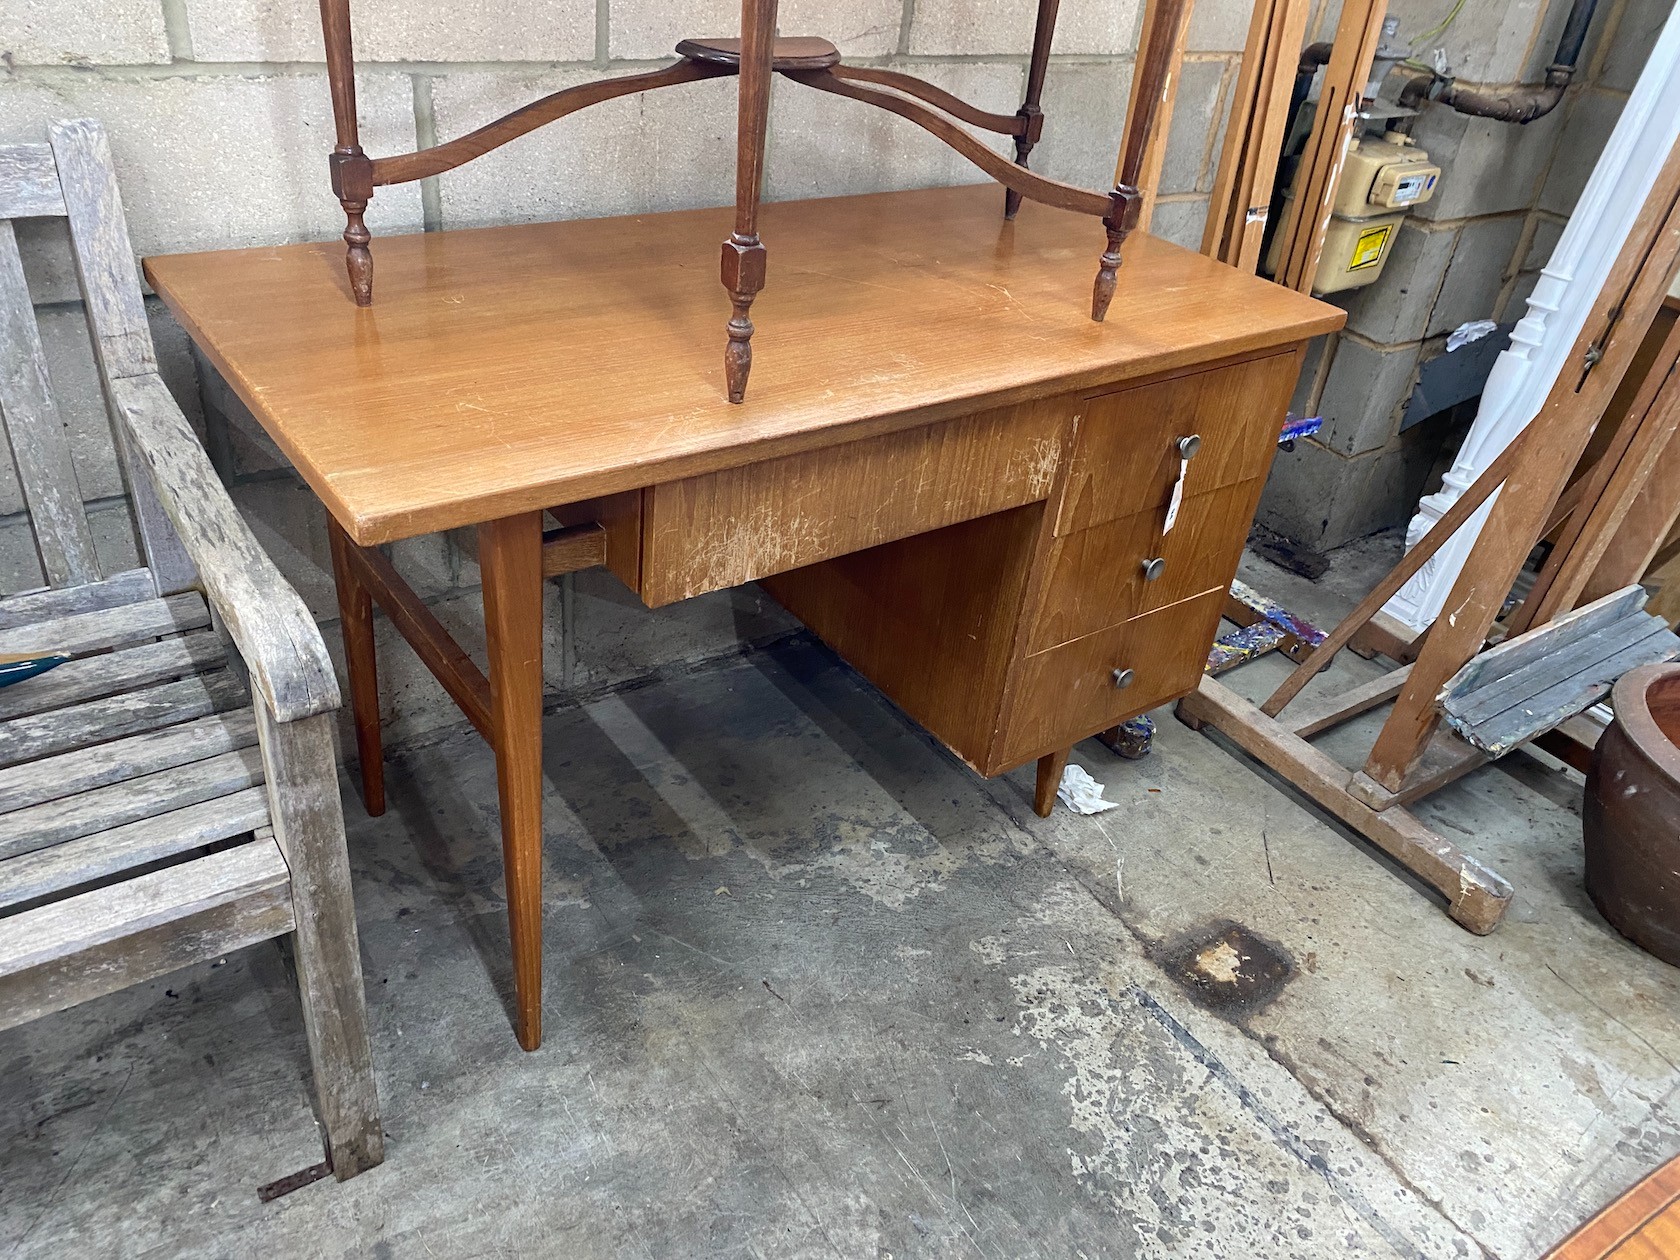 A mid century teak kneehole desk, length 121cm, depth 60cm, height 76cm